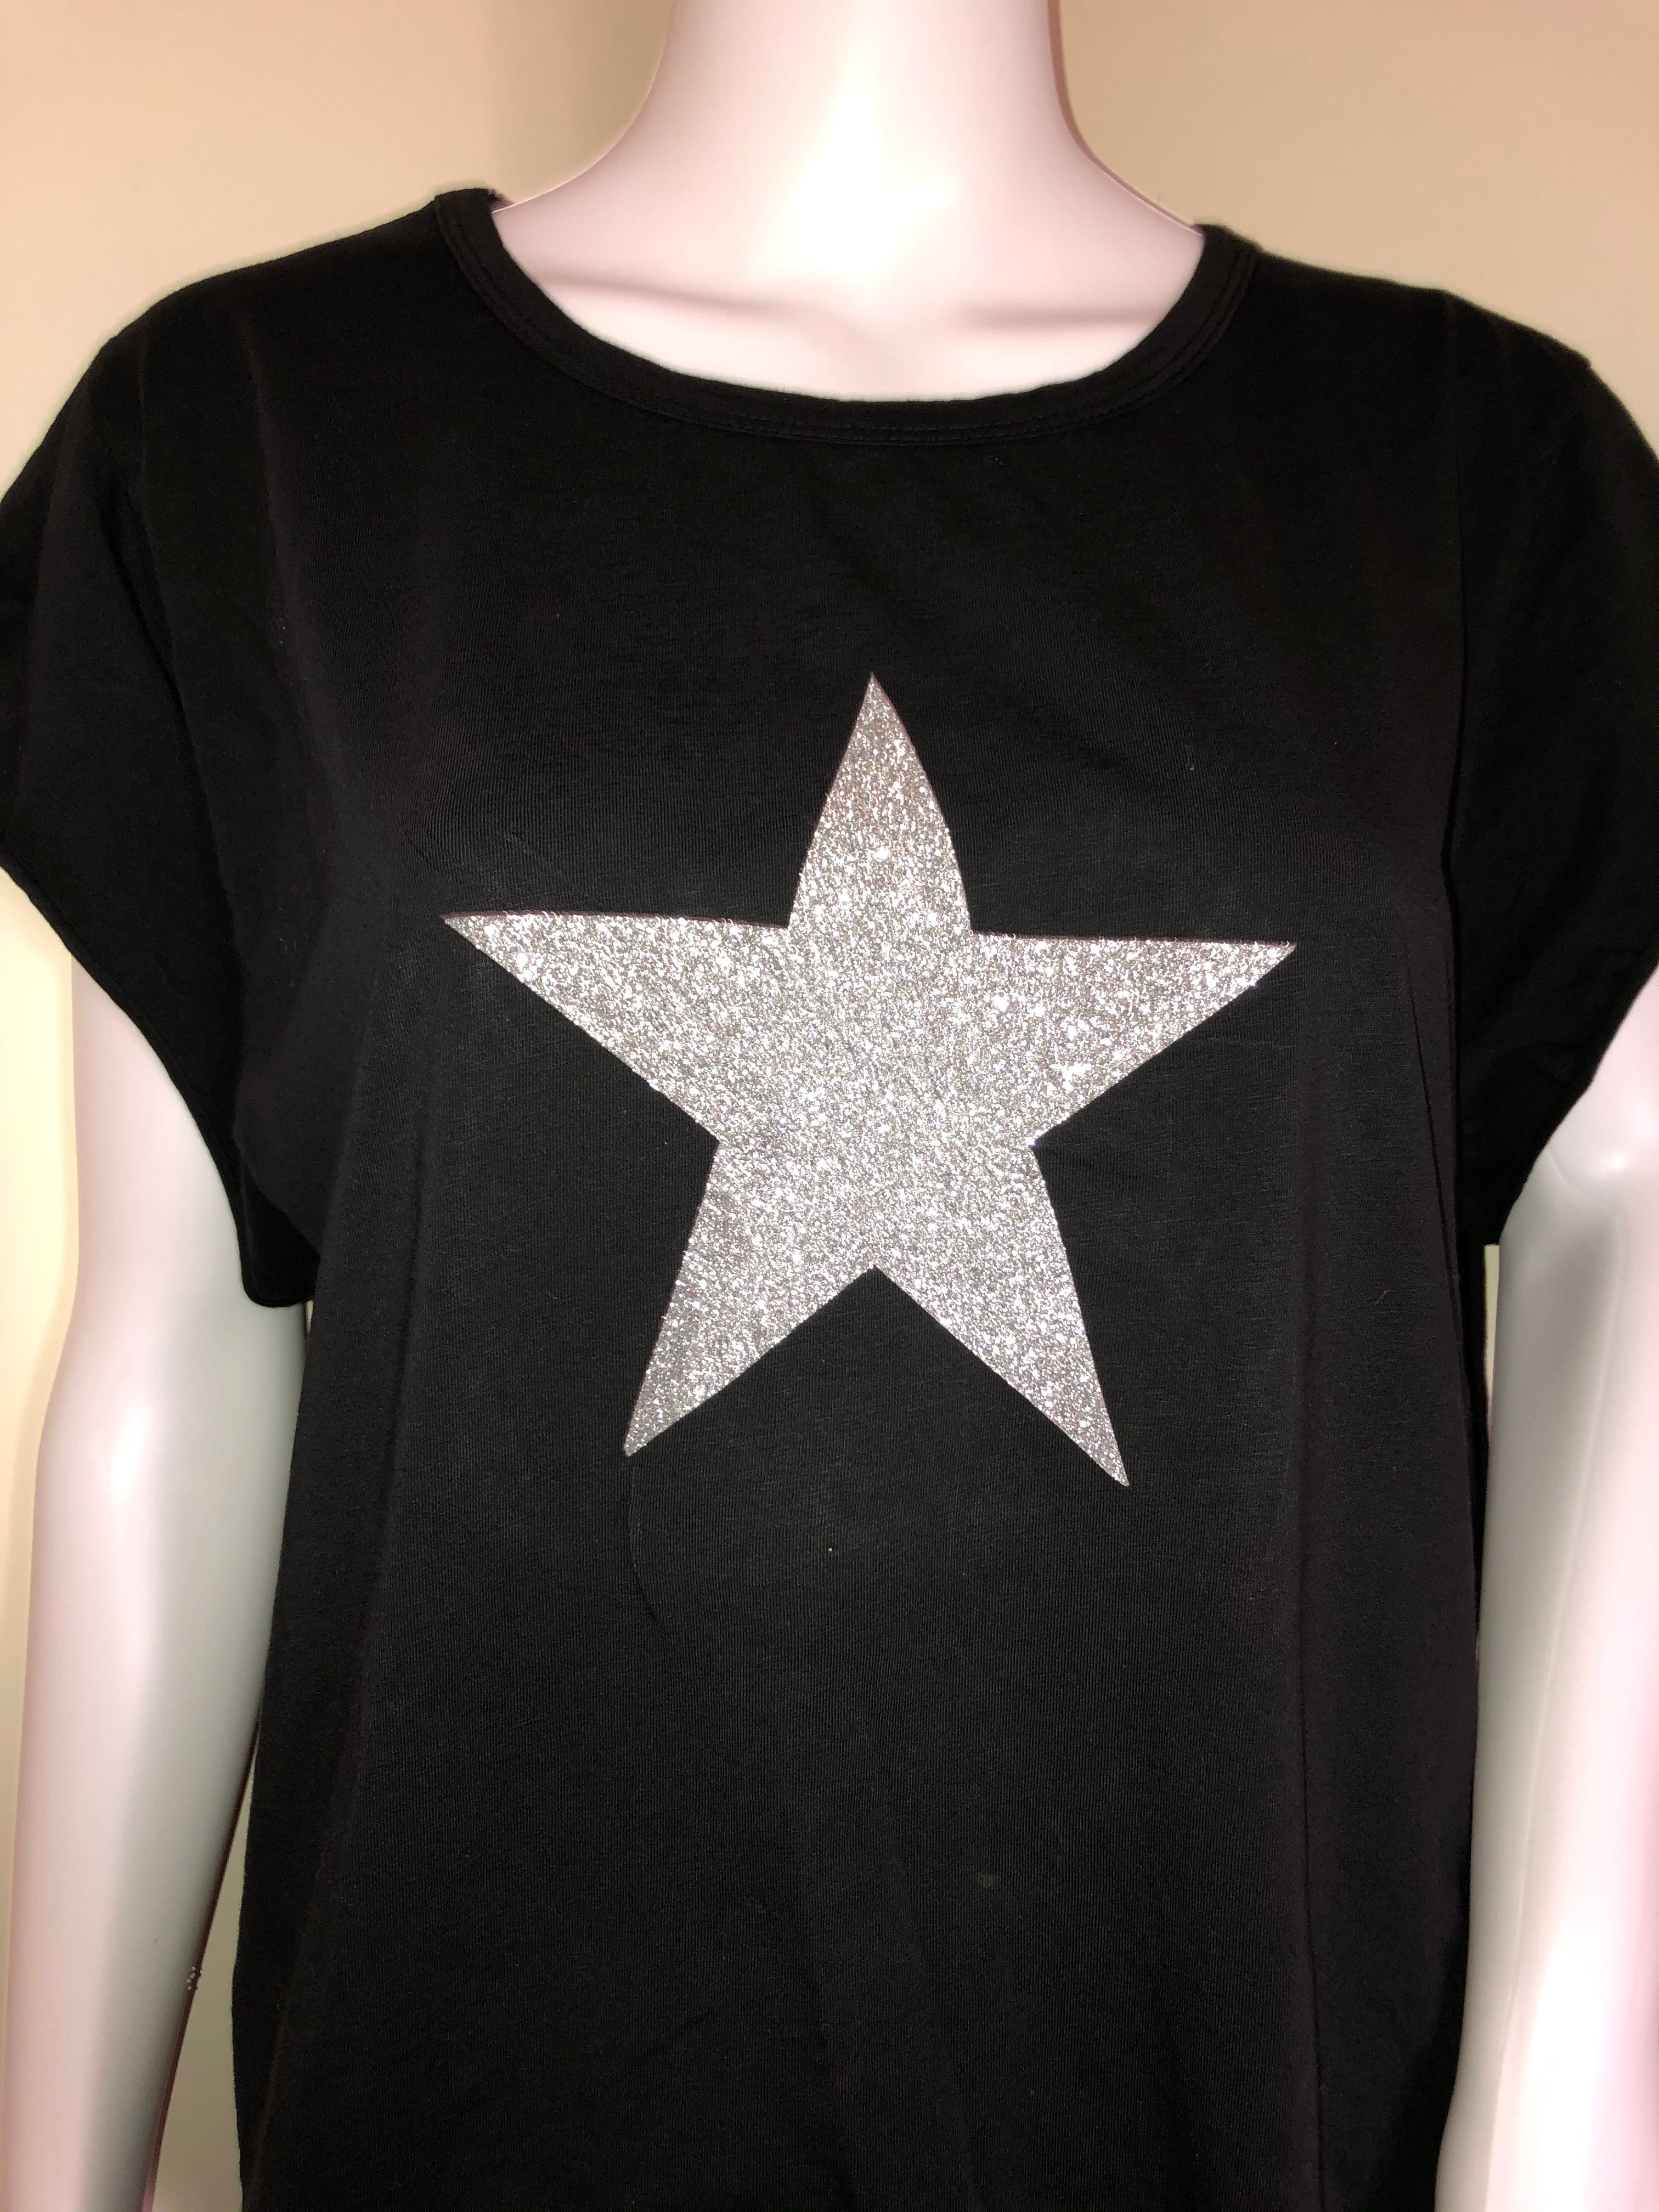 Liven Black Glitter Star Printed Tee - Liven Boutique